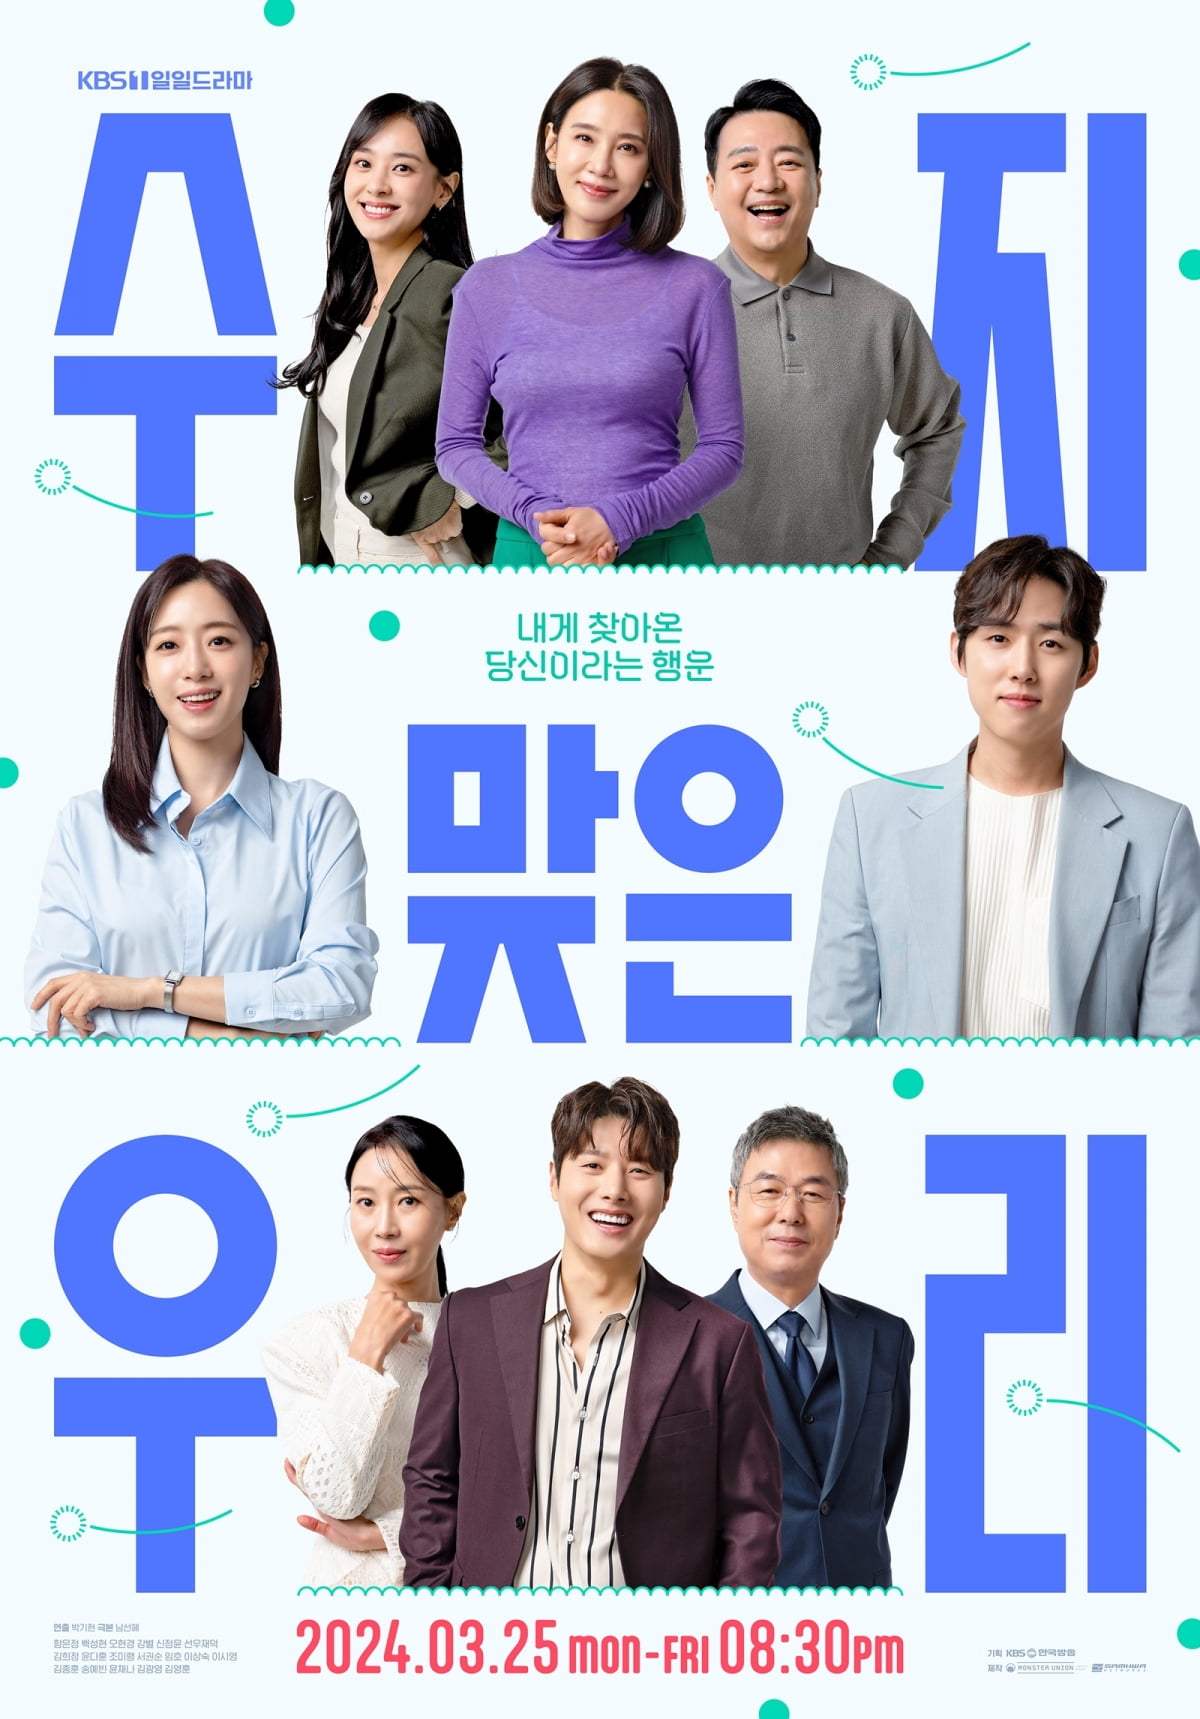 KBS 1TV 새 일일드라마 '수지맞은 우리' 8인 포스터. 